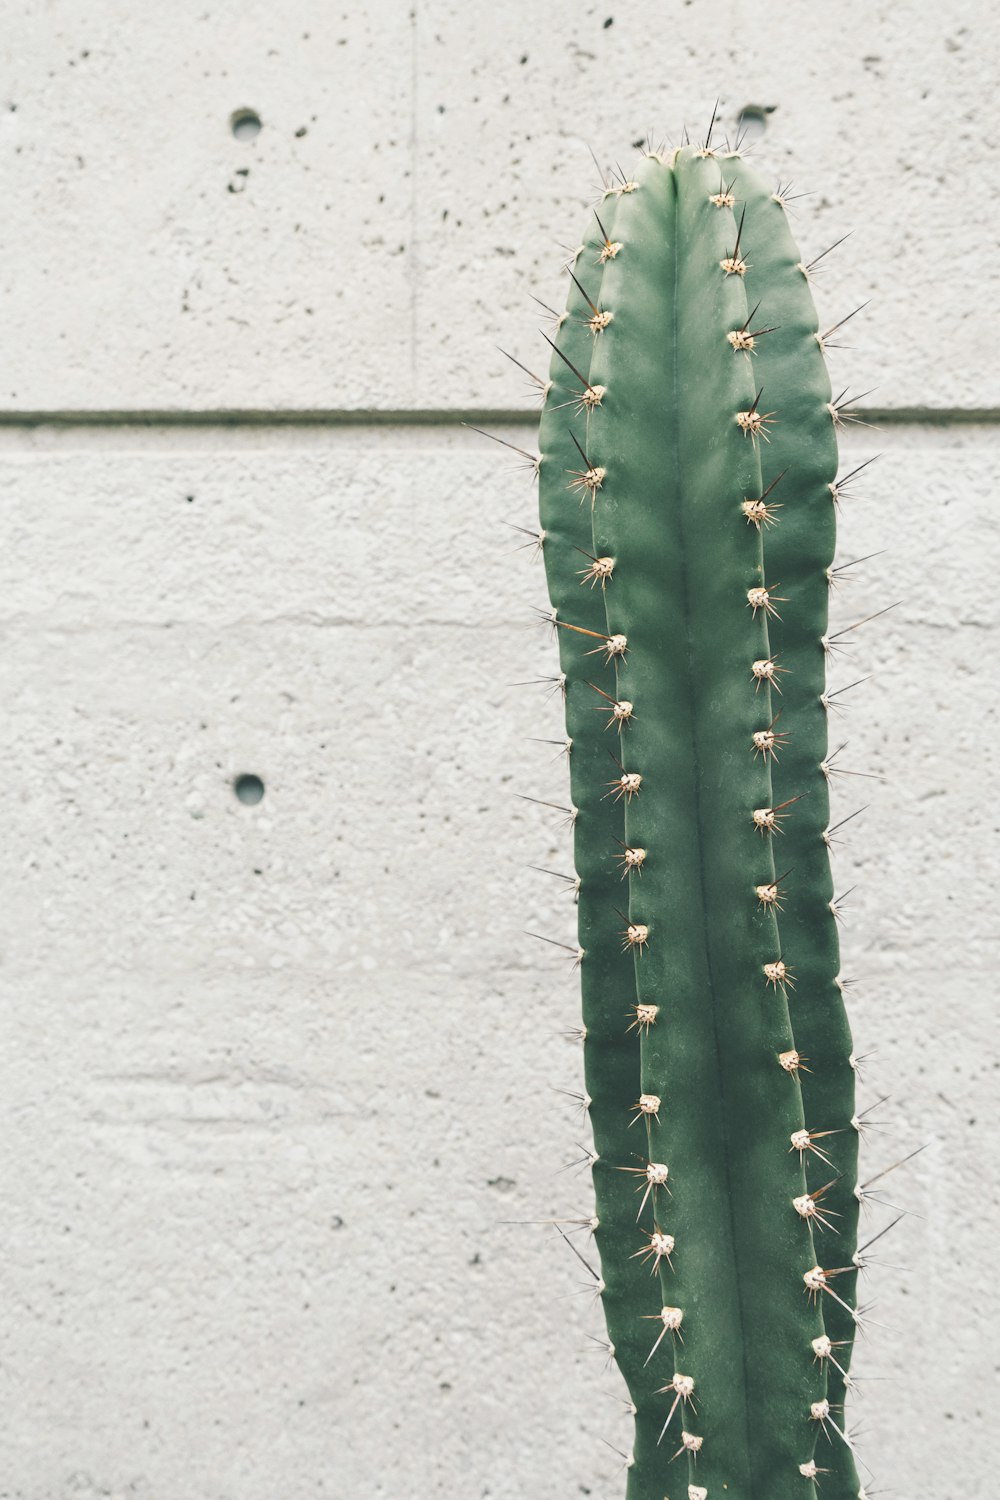 green cactus near wall